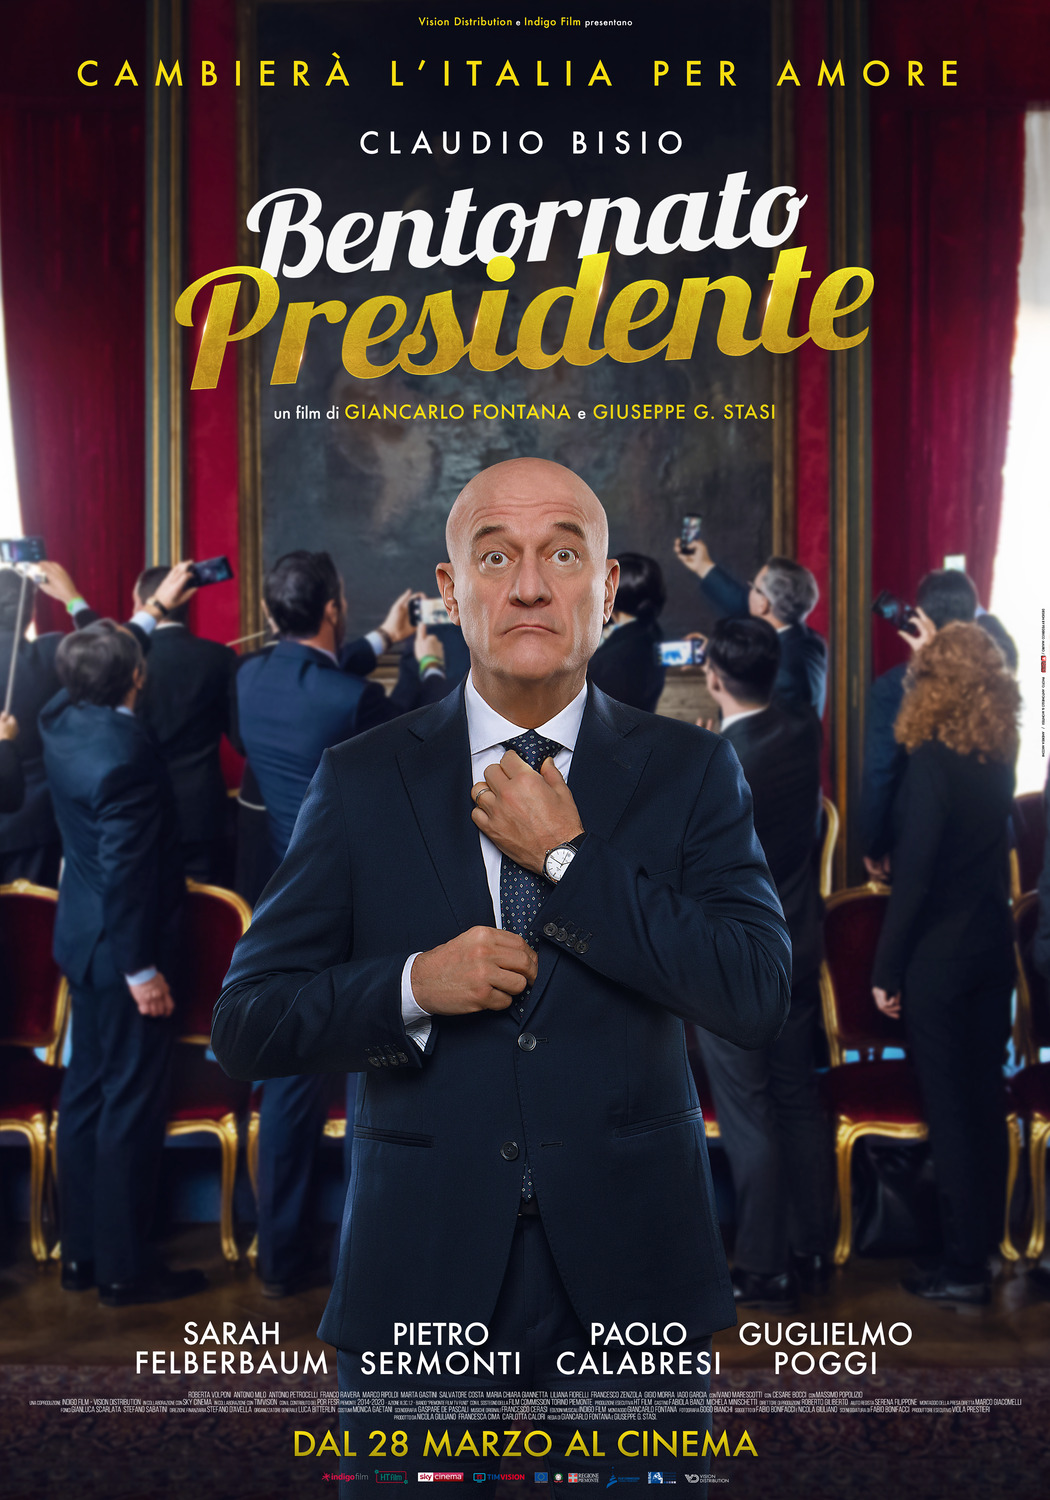 Extra Large Movie Poster Image for Bentornato presidente 